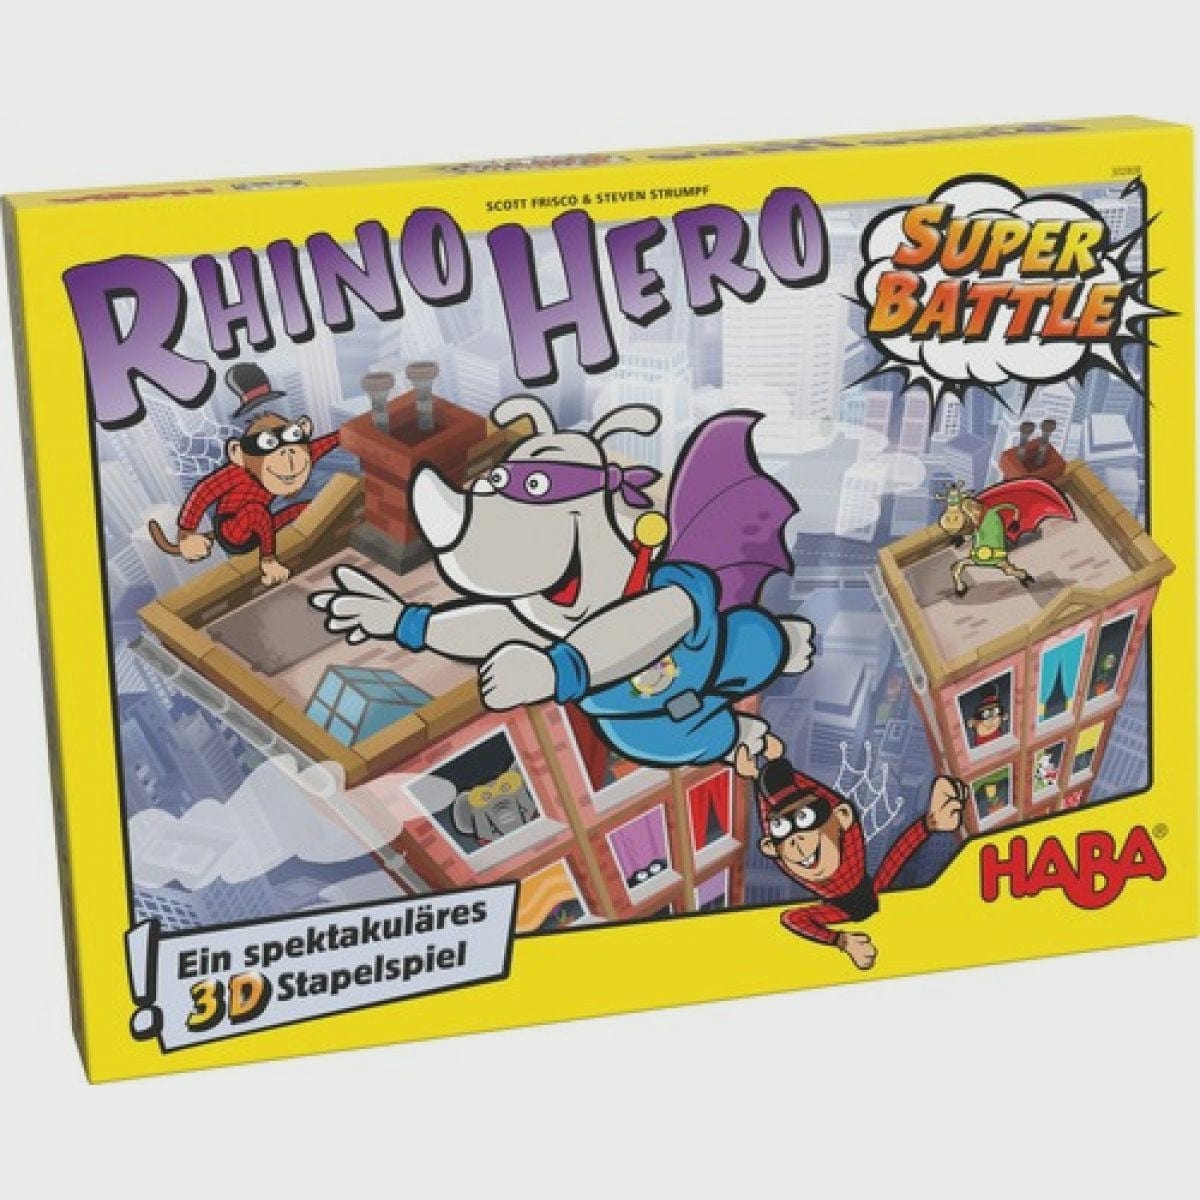 HABA Board game Rhino Hero Superbattle